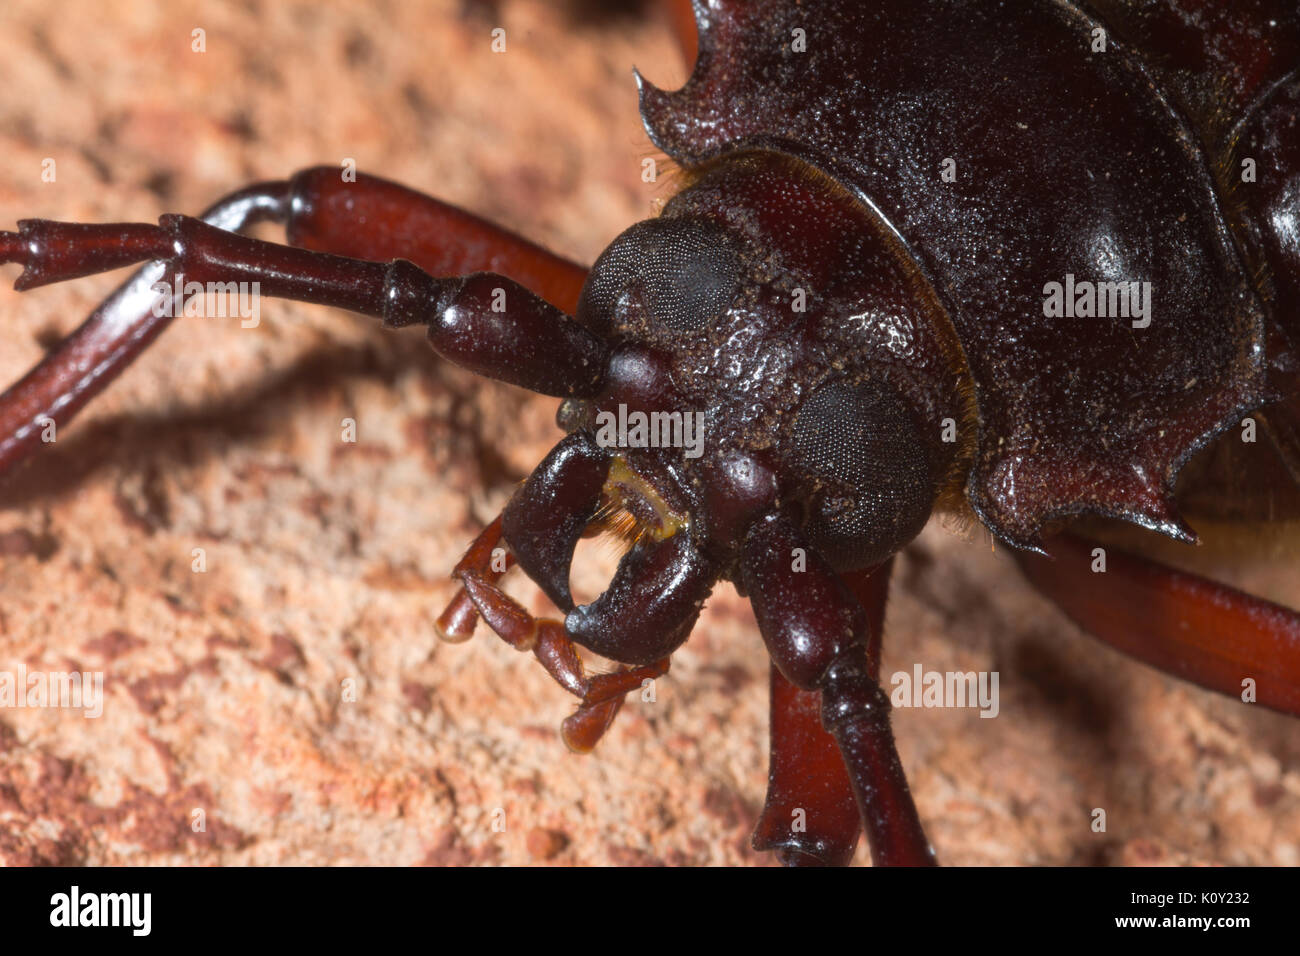 Close up view of the head of a Palo Verde beetle (Derobrachus geminatus) Stock Photo